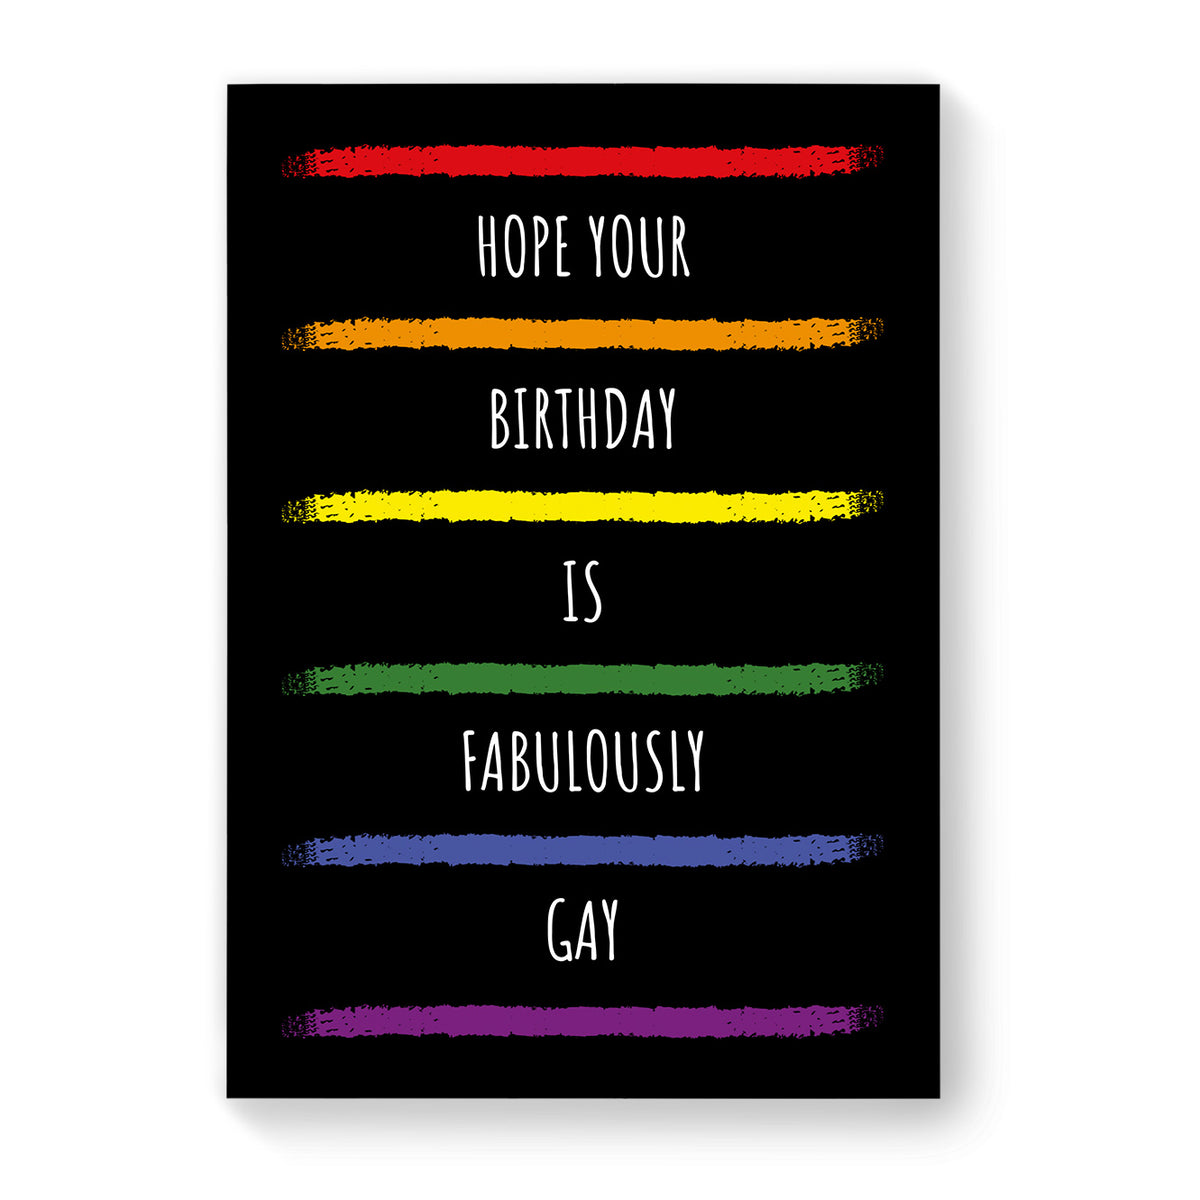 Hope your Birthday is Fabulously Gay - Lesbian Gay Birthday Card - Black Rainbow Stripes | Gift